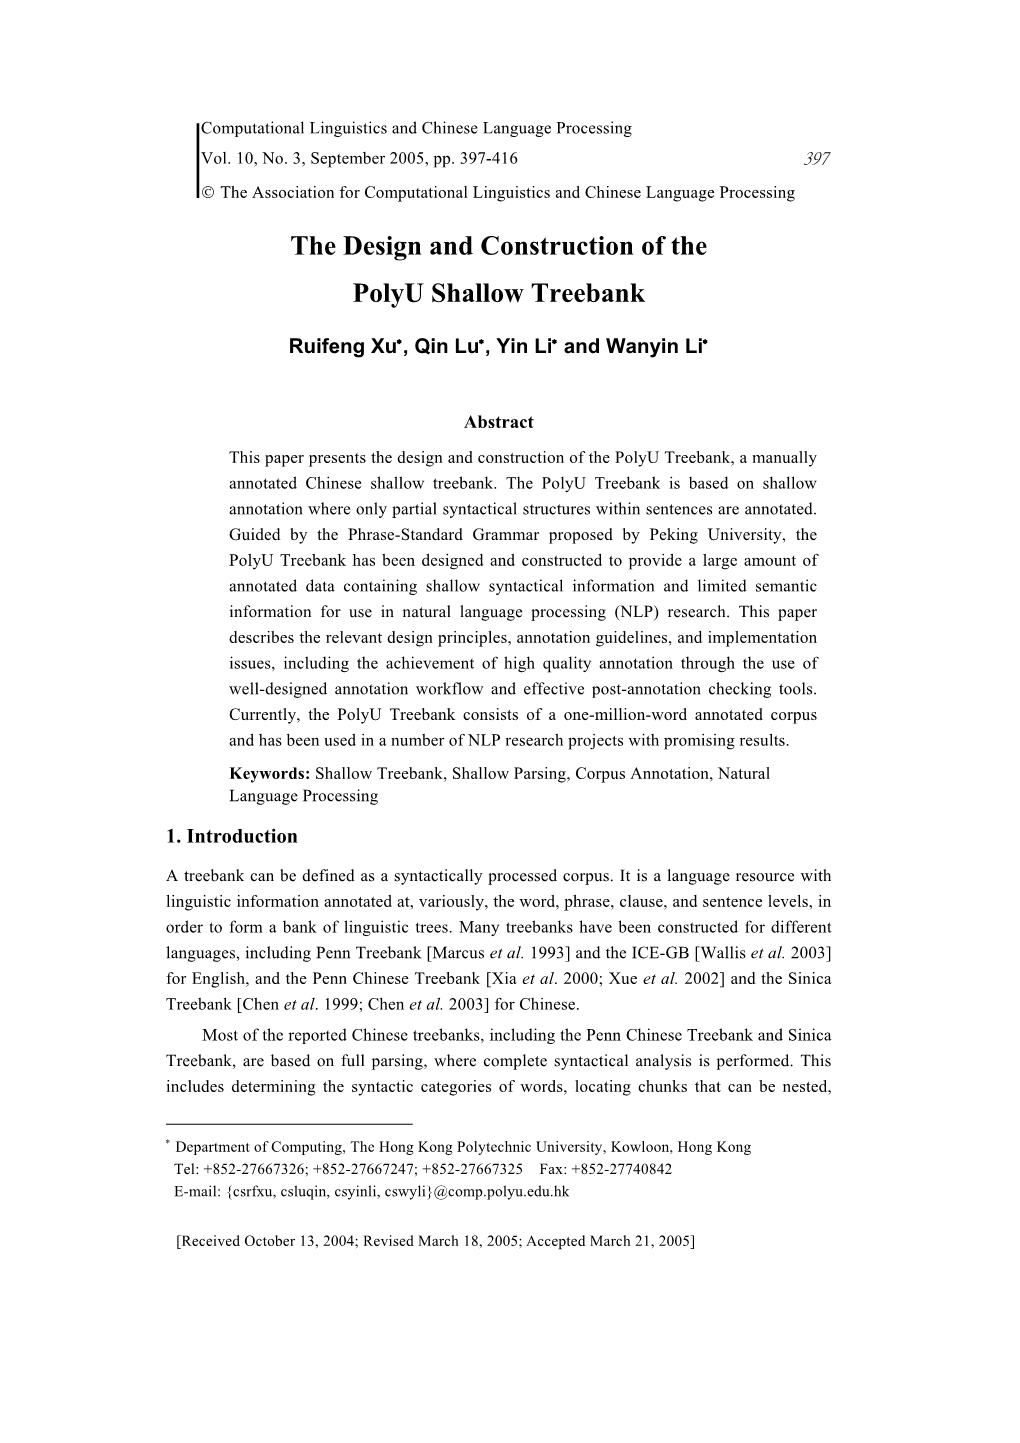 The Design and Construction of the Polyu Shallow Treebank